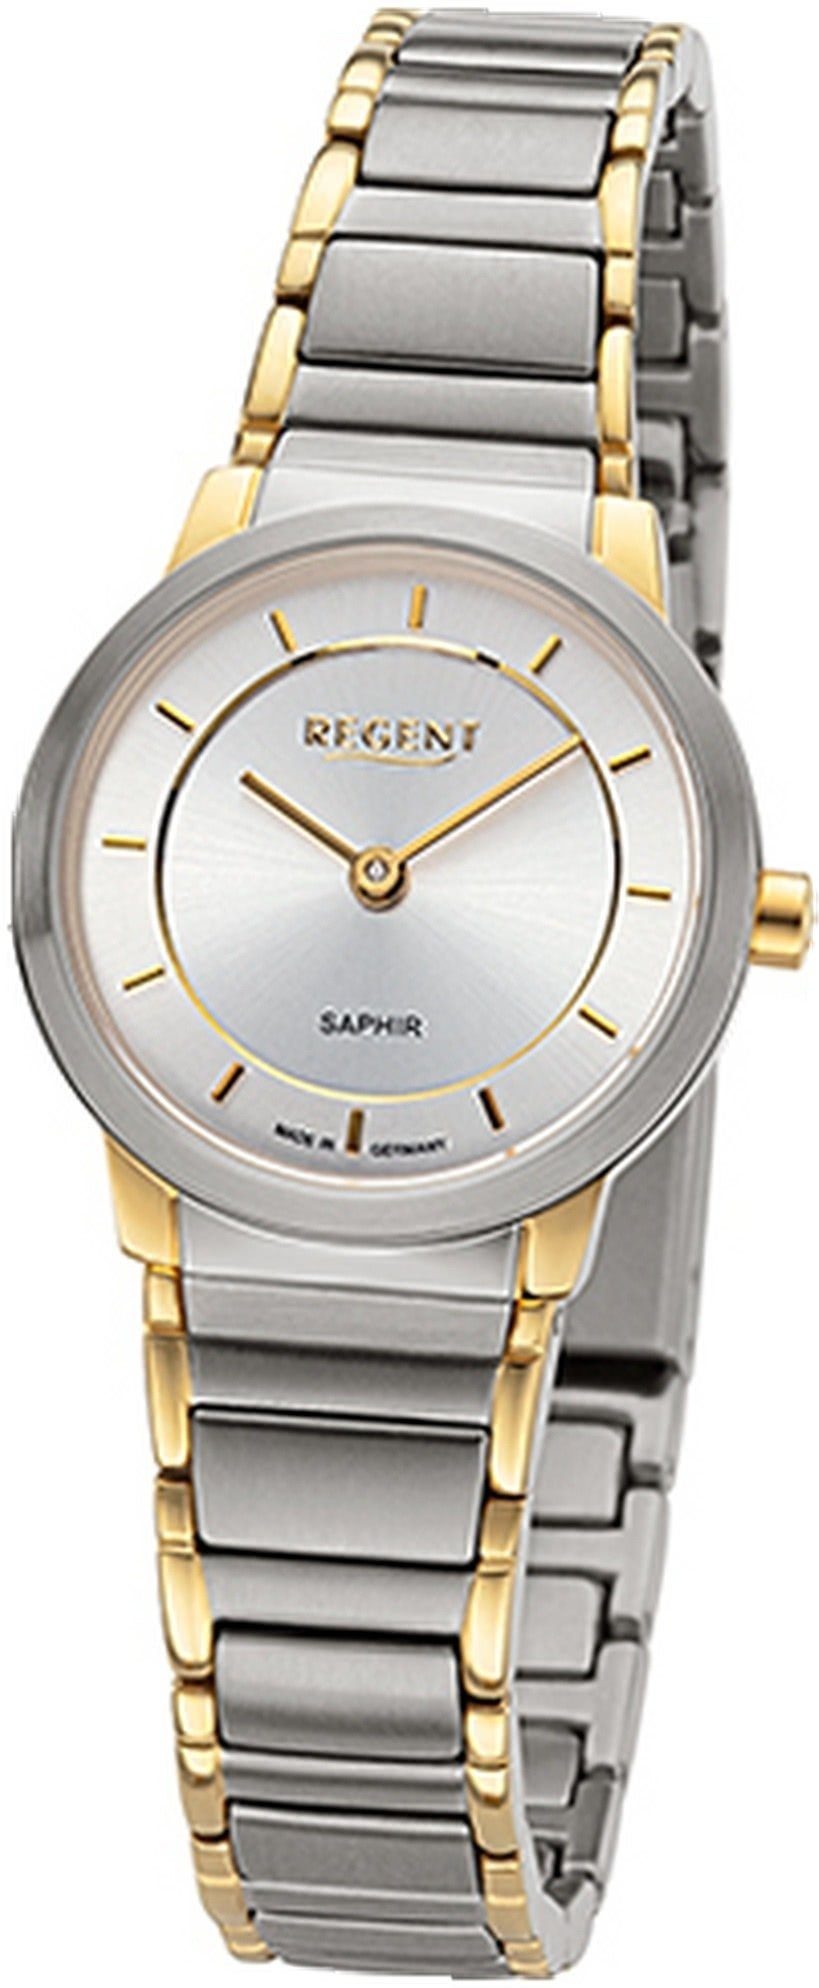 Damenuhr Quarzuhr Analog, Regent rundes Damen Gehäuse, (26,5mm) silber gold, Metallbandarmband Armbanduhr Regent klein